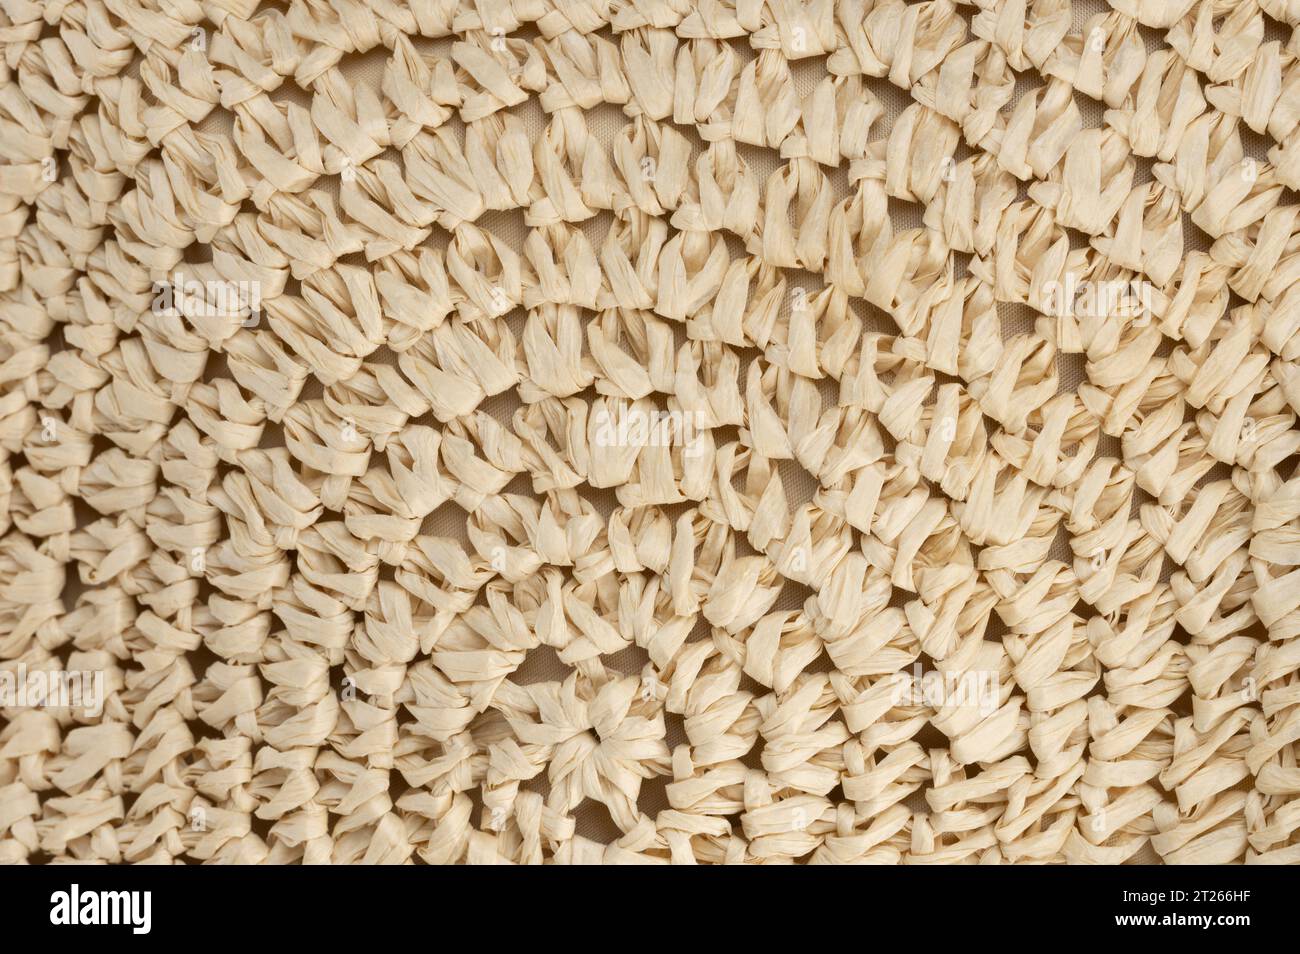 Round mesh beige sennit background close up view Stock Photo